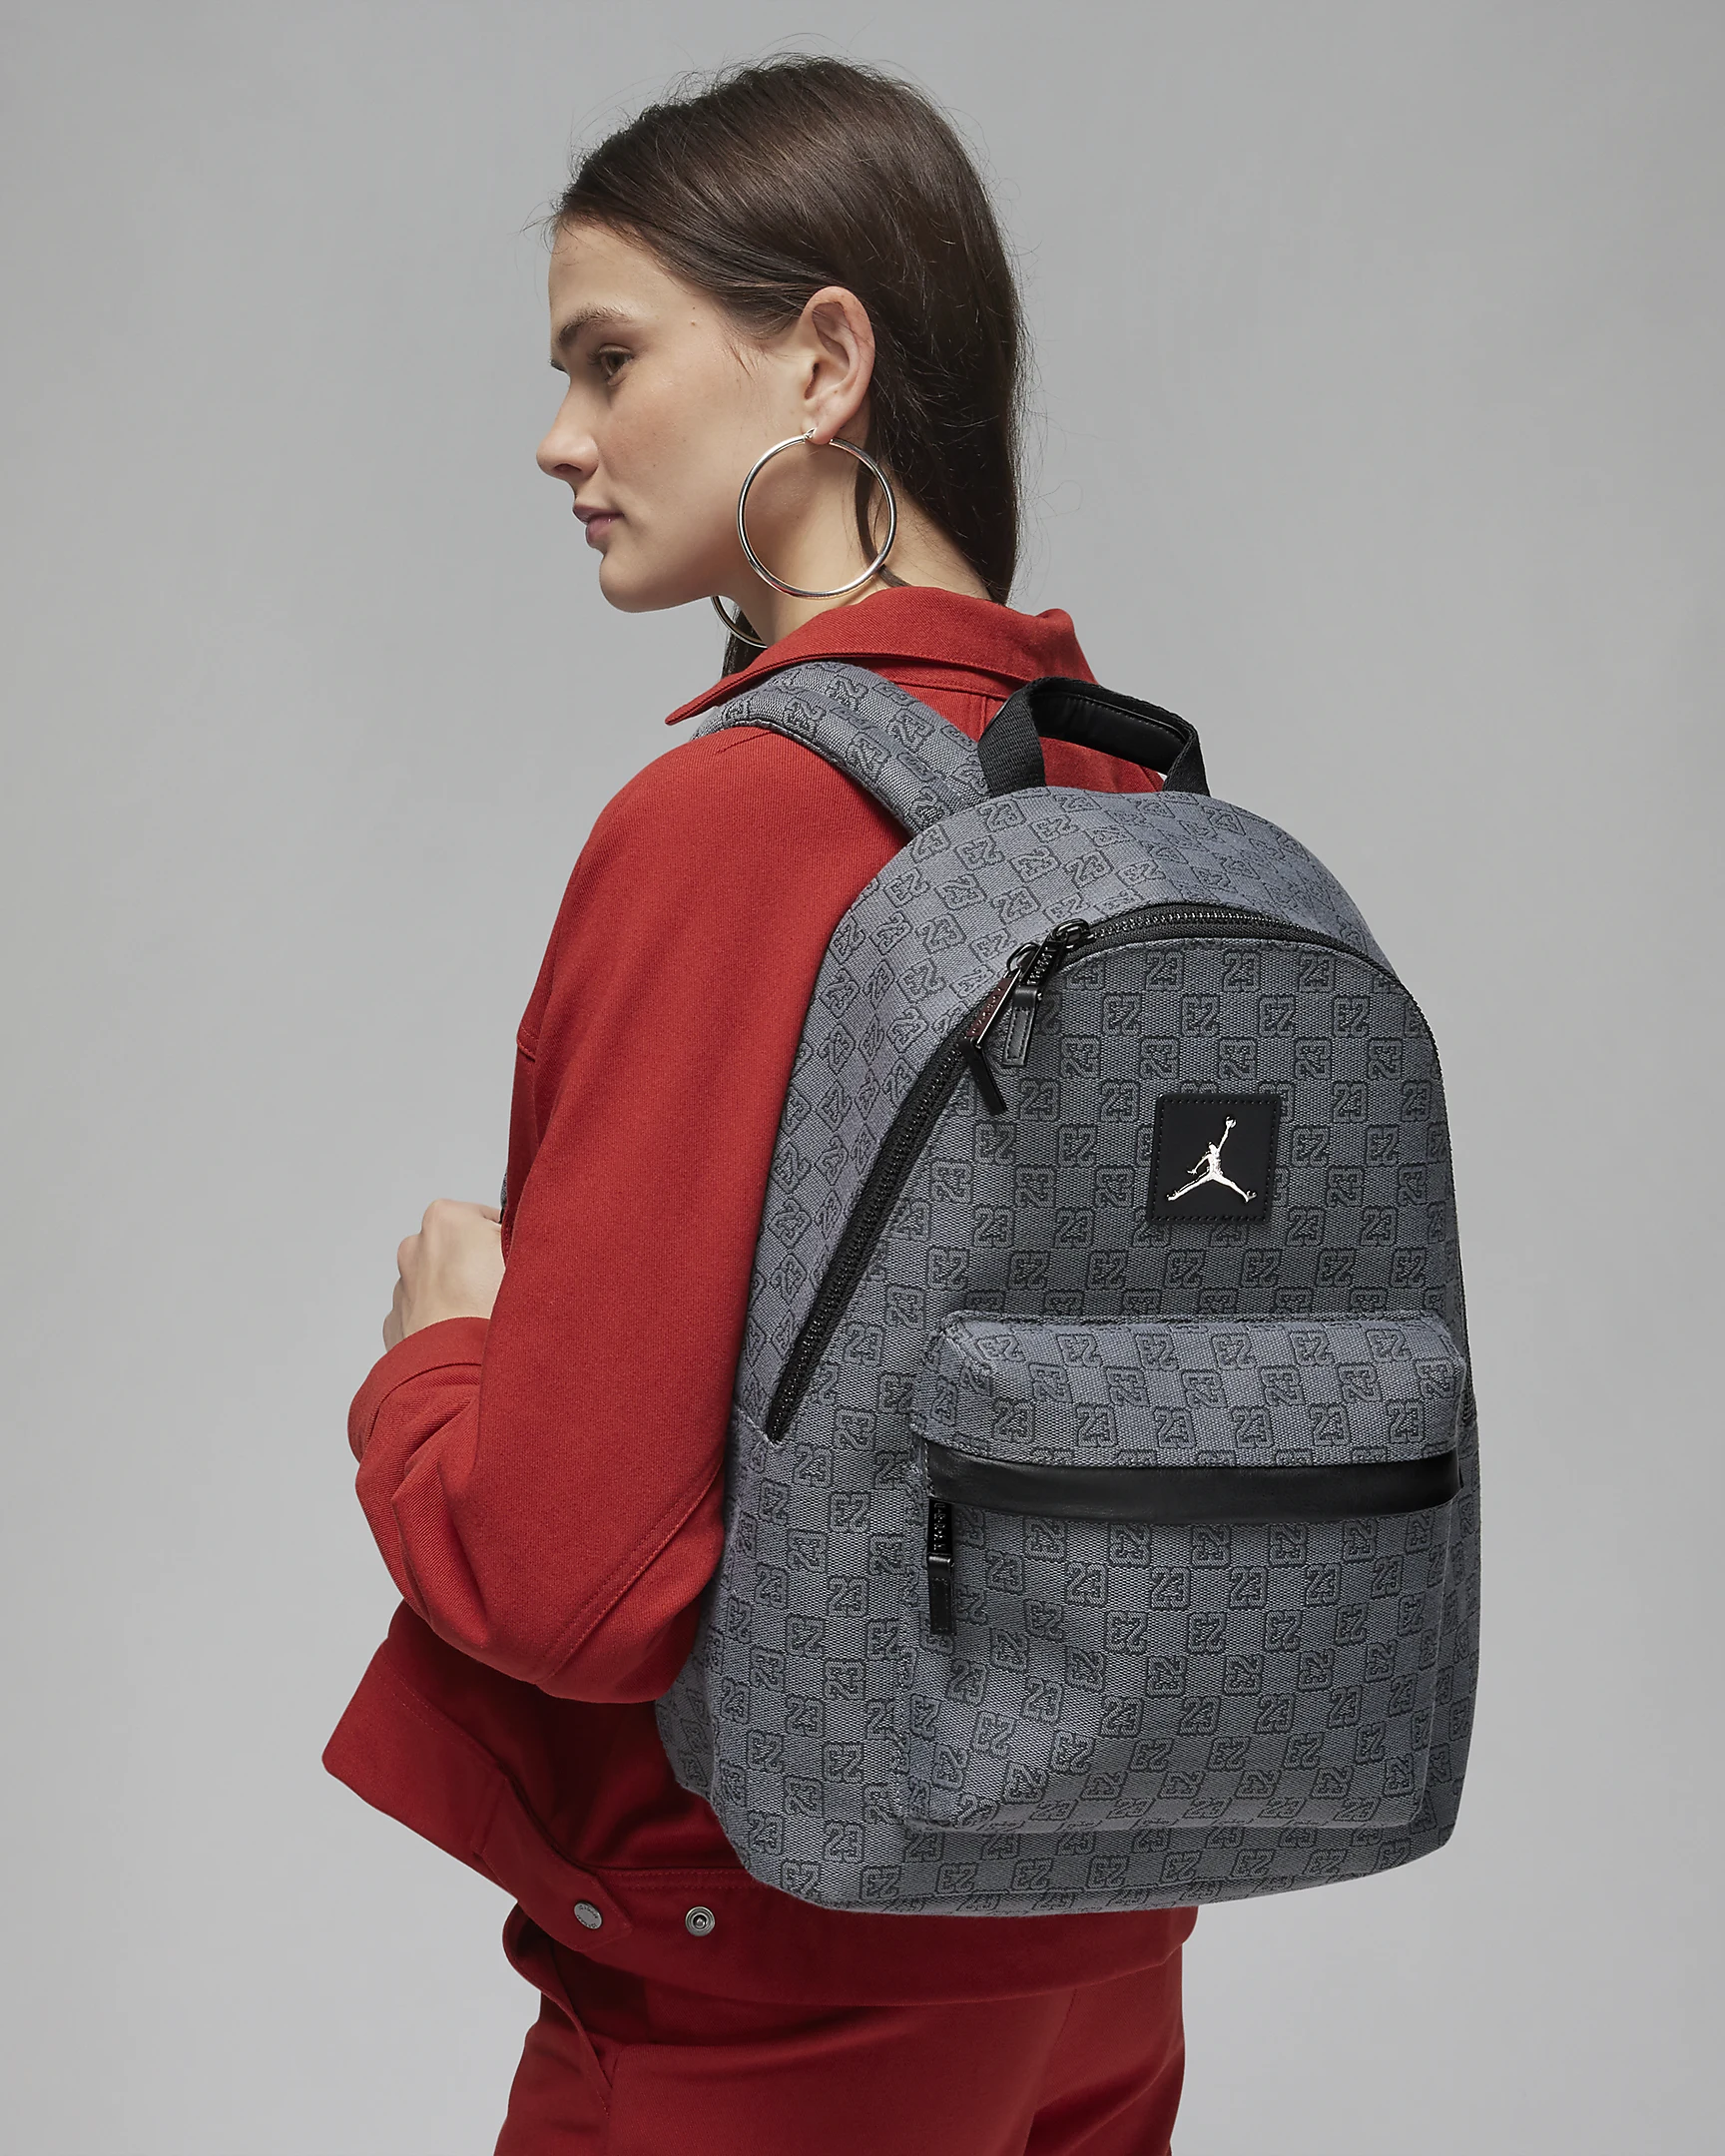 Jordan Brand Monogram backpack